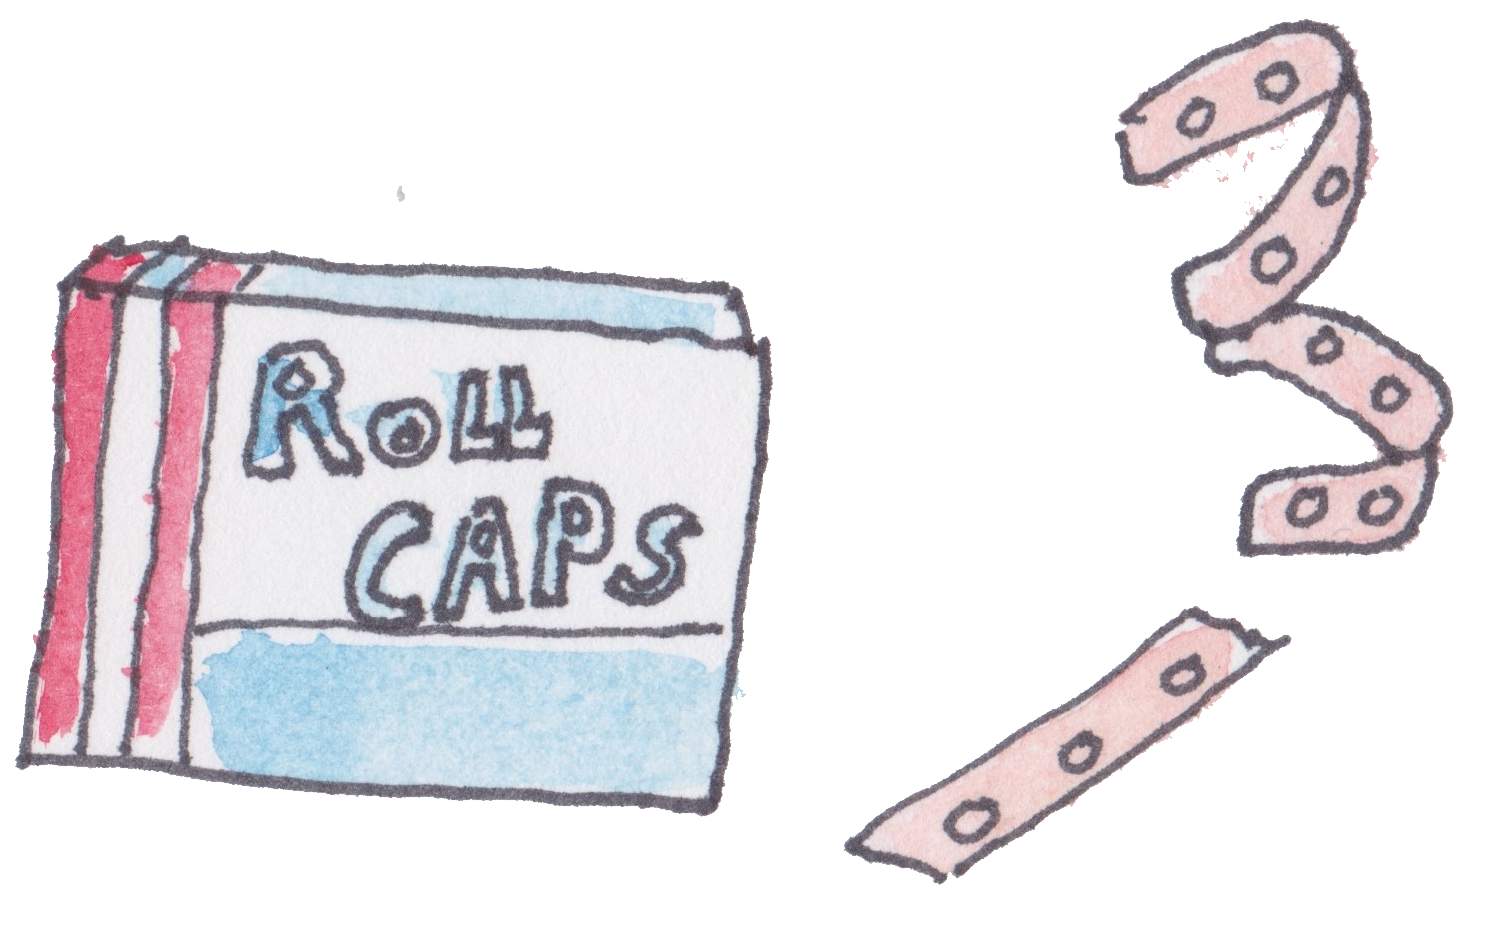 Box of caps and strip of caps